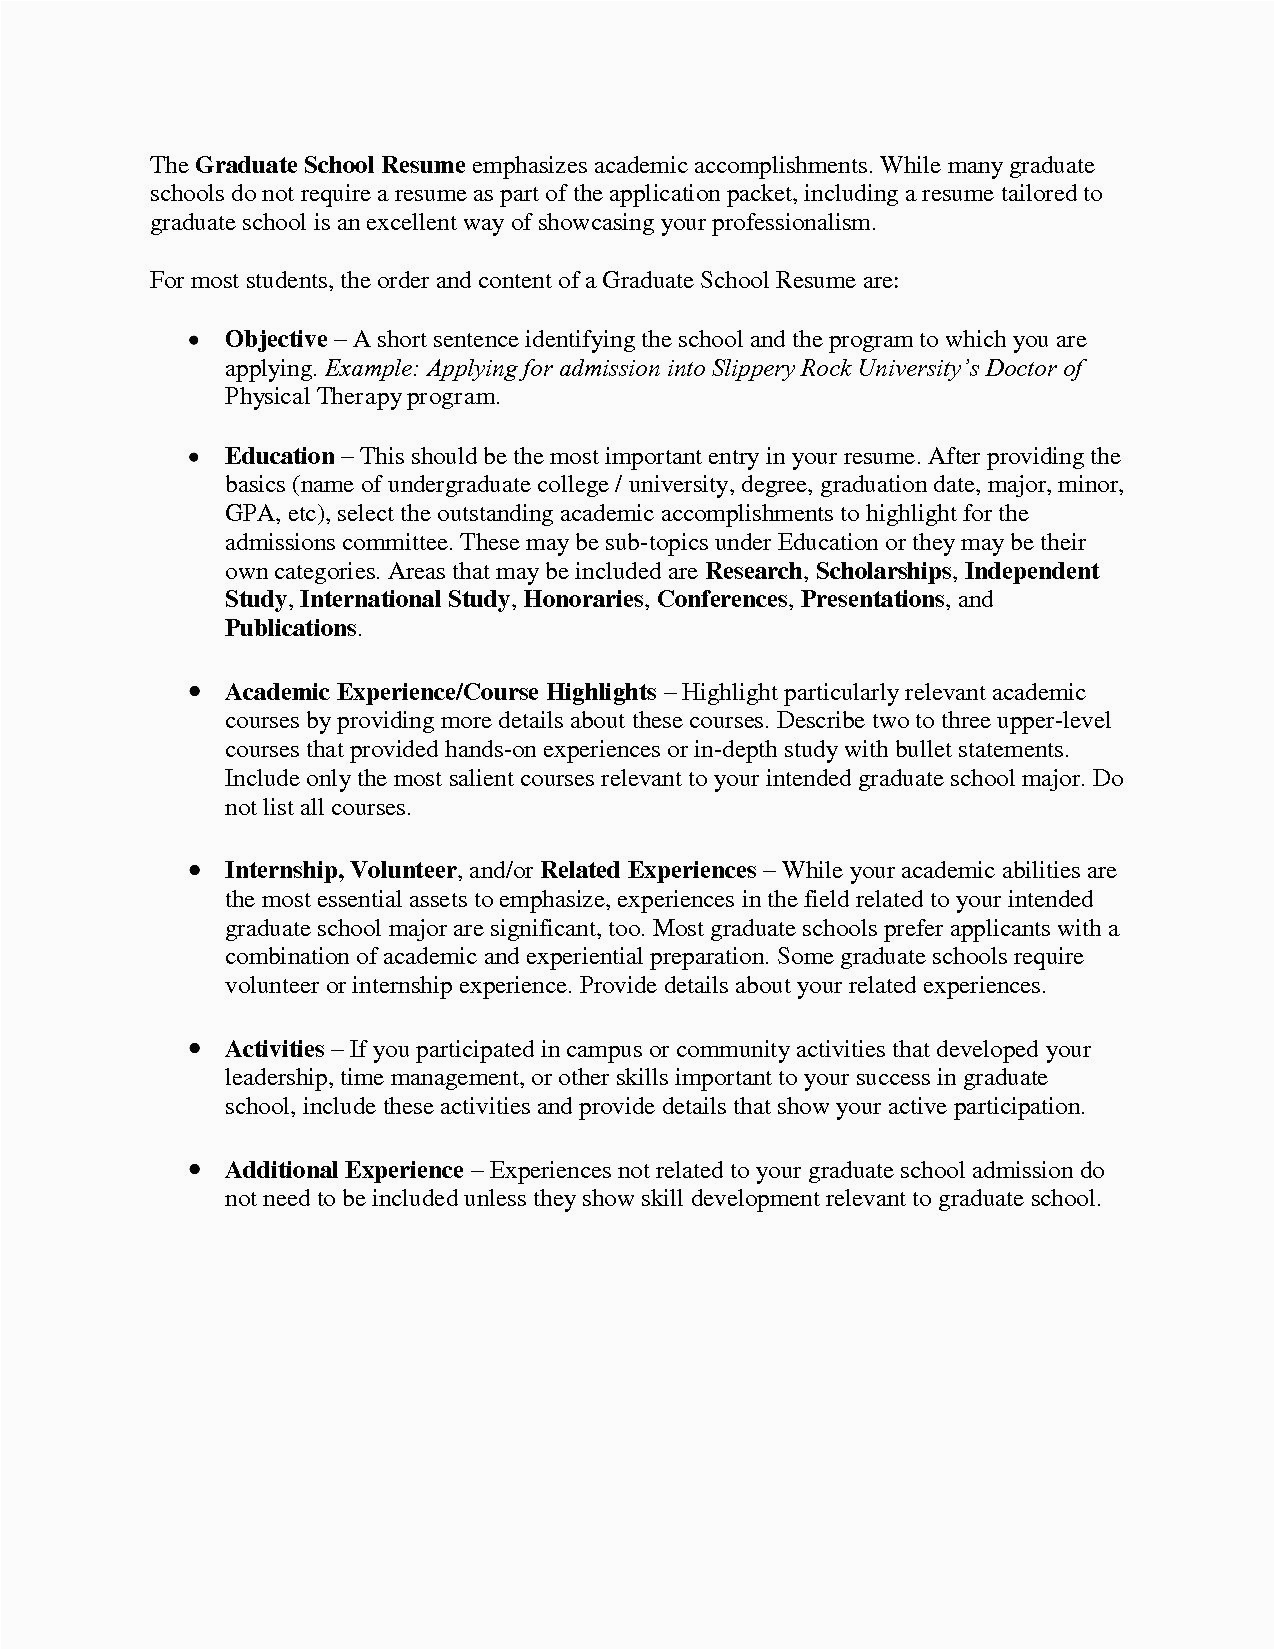 Sample Objective for Graduate School Resume Graduate School Resume Objective Statement Examples